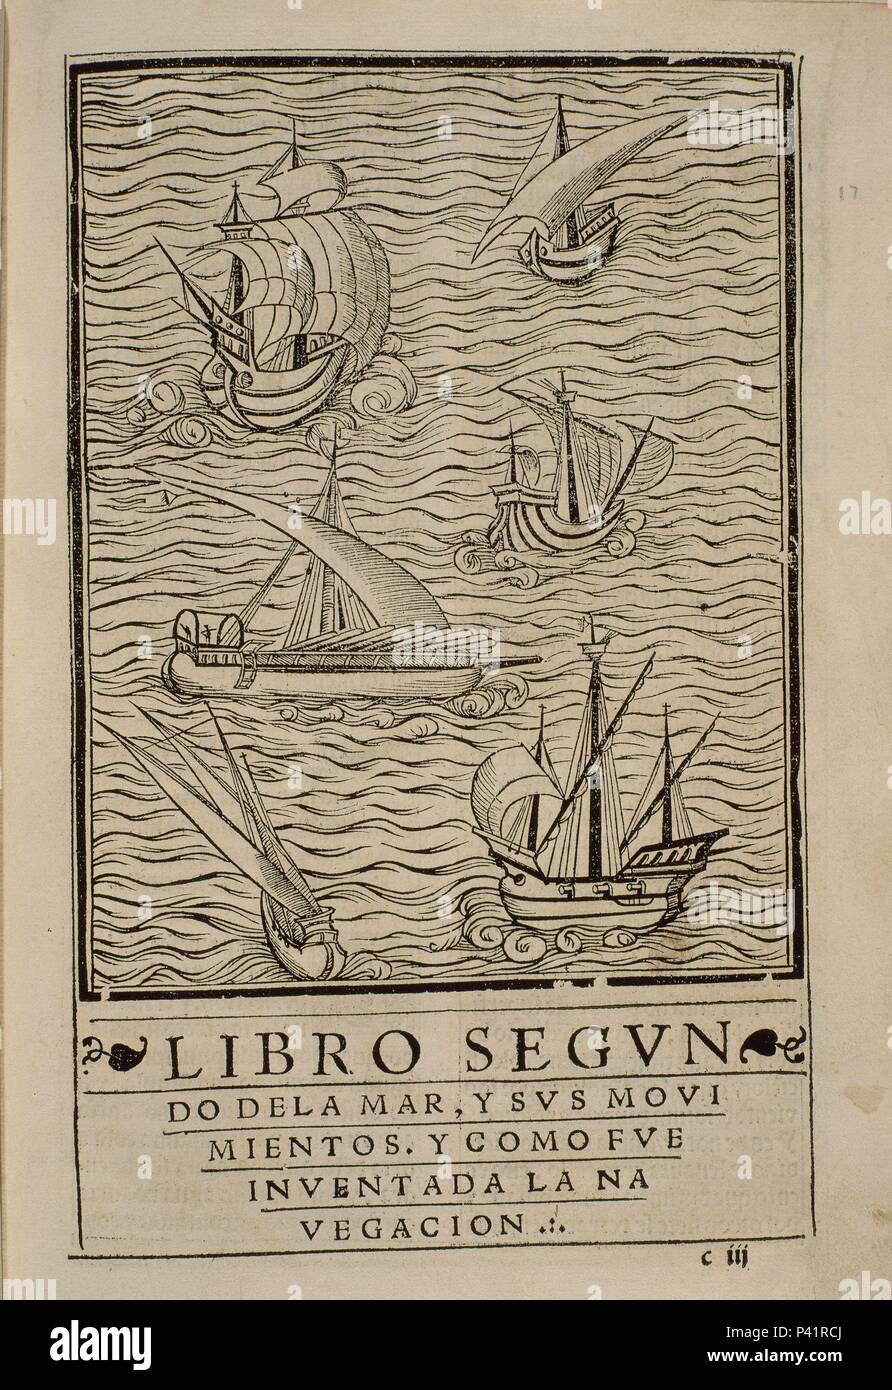 ARTE DE NAVEGAR-diversos barcos de vela. Autor: Pedro de Medina  (1493-1567). Ubicación: BIBLIOTECA NACIONAL-COLECCION, Madrid, España  Fotografía de stock - Alamy